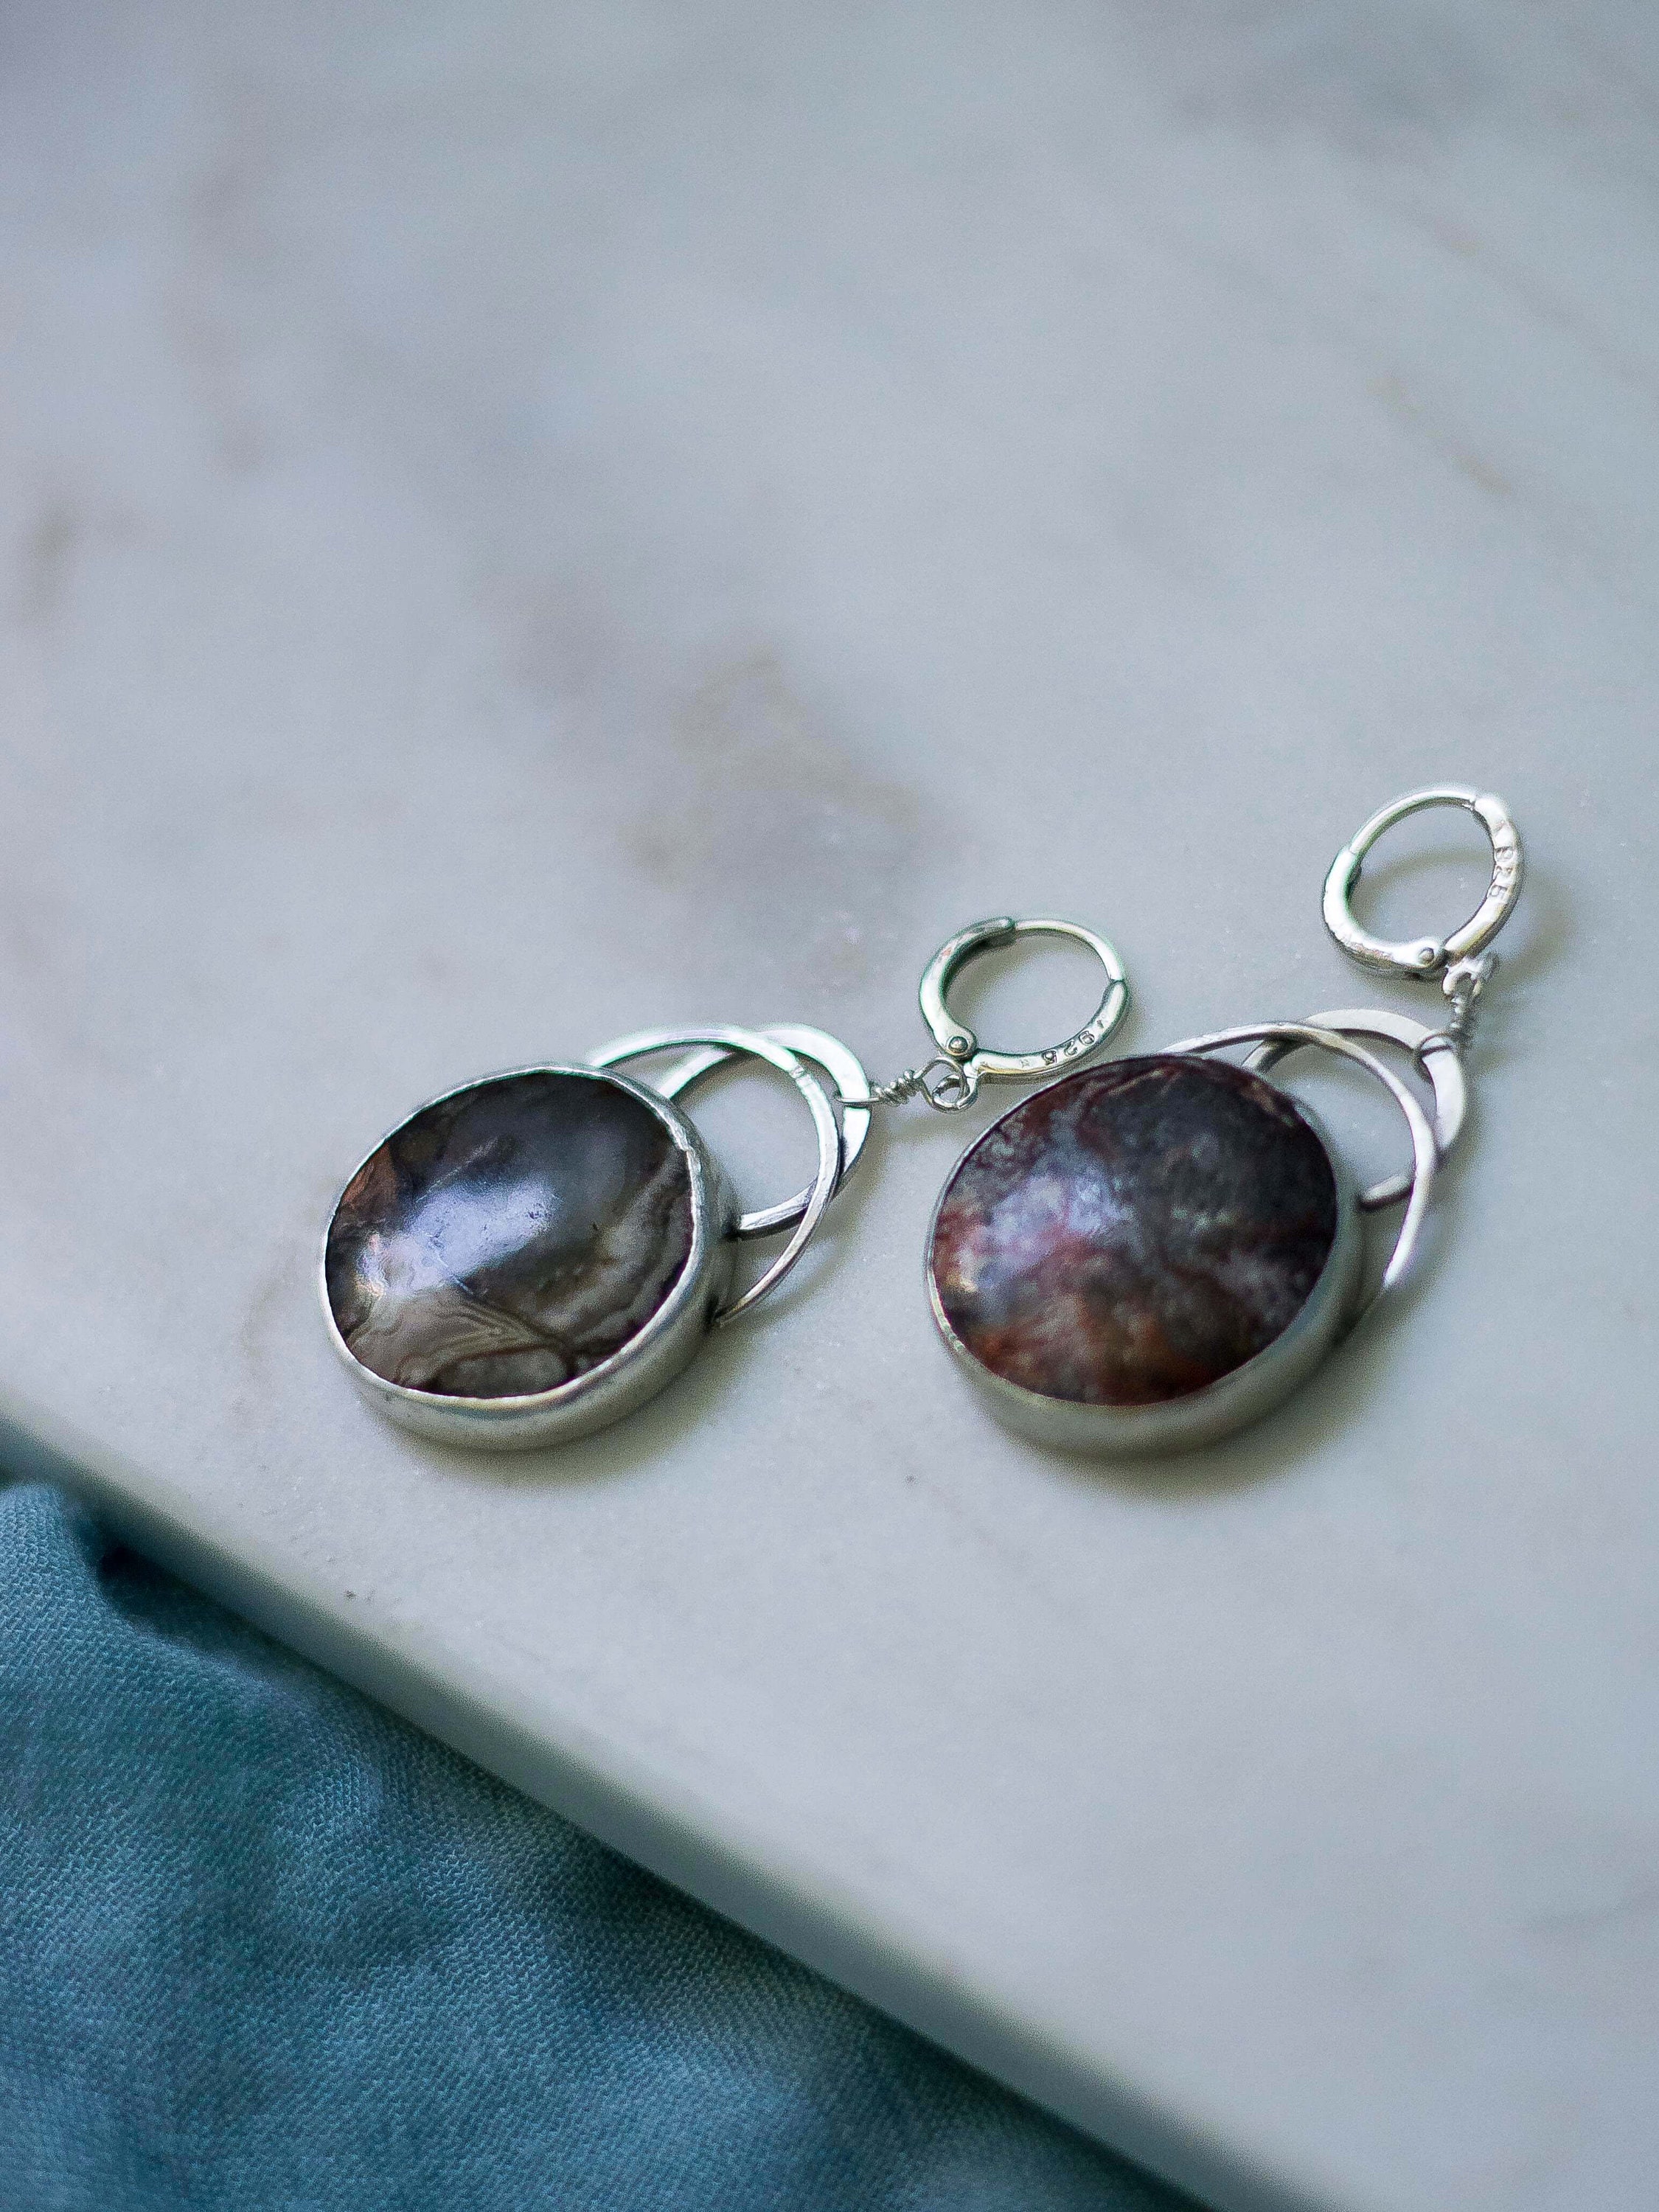 River lace agate circular earrings Full moon earrings Agate | Etsy